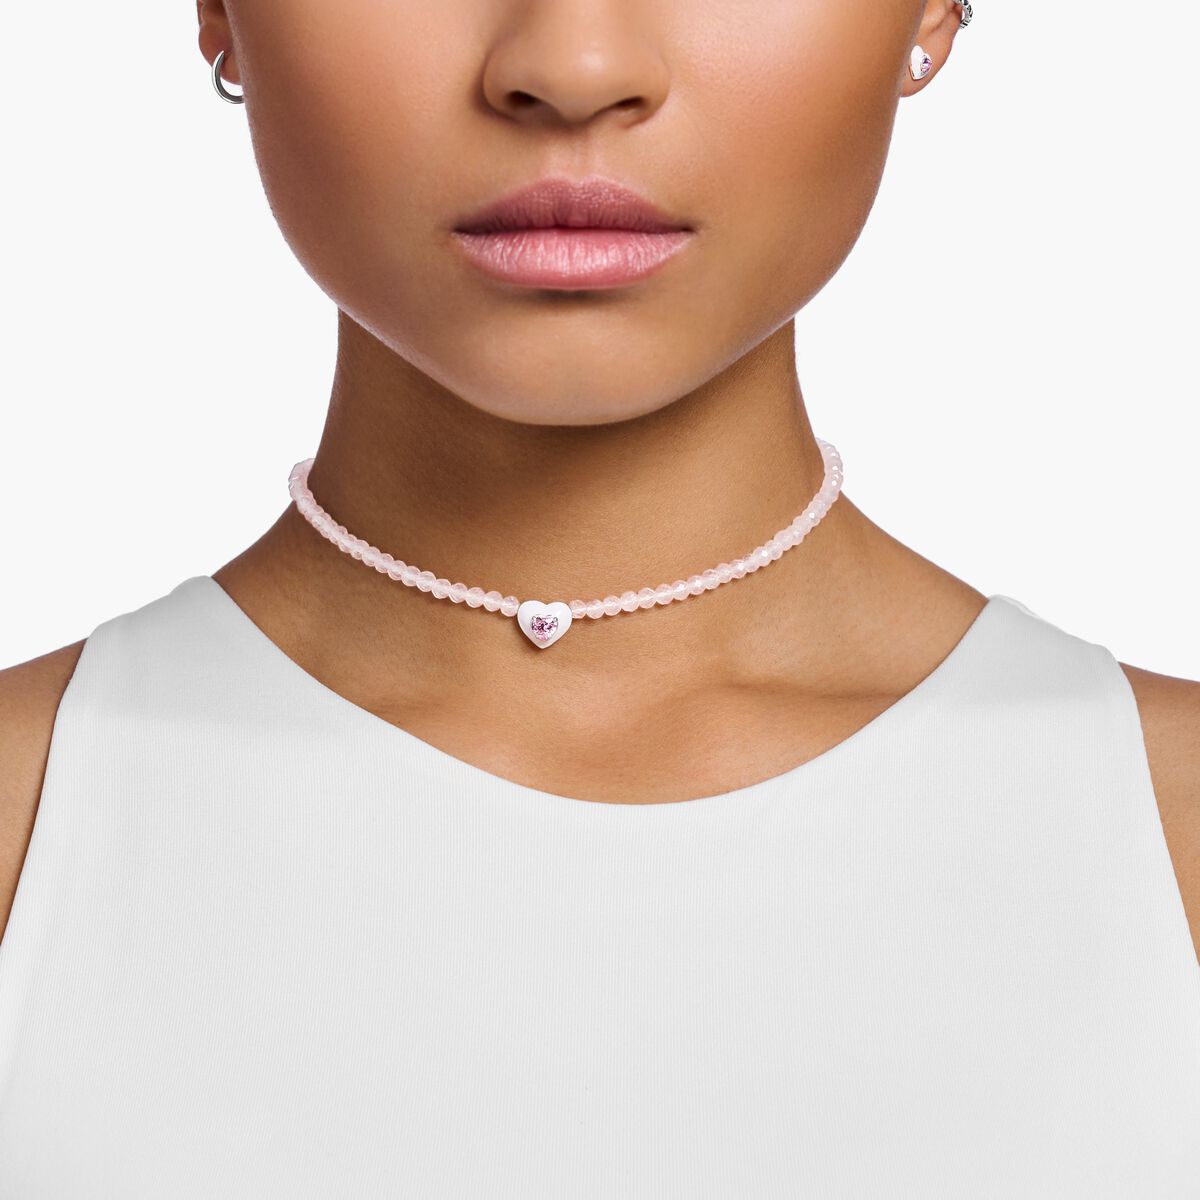 Thomas Sabo Choker Heart Ladies Necklace, Adjustable KE2181-035-9